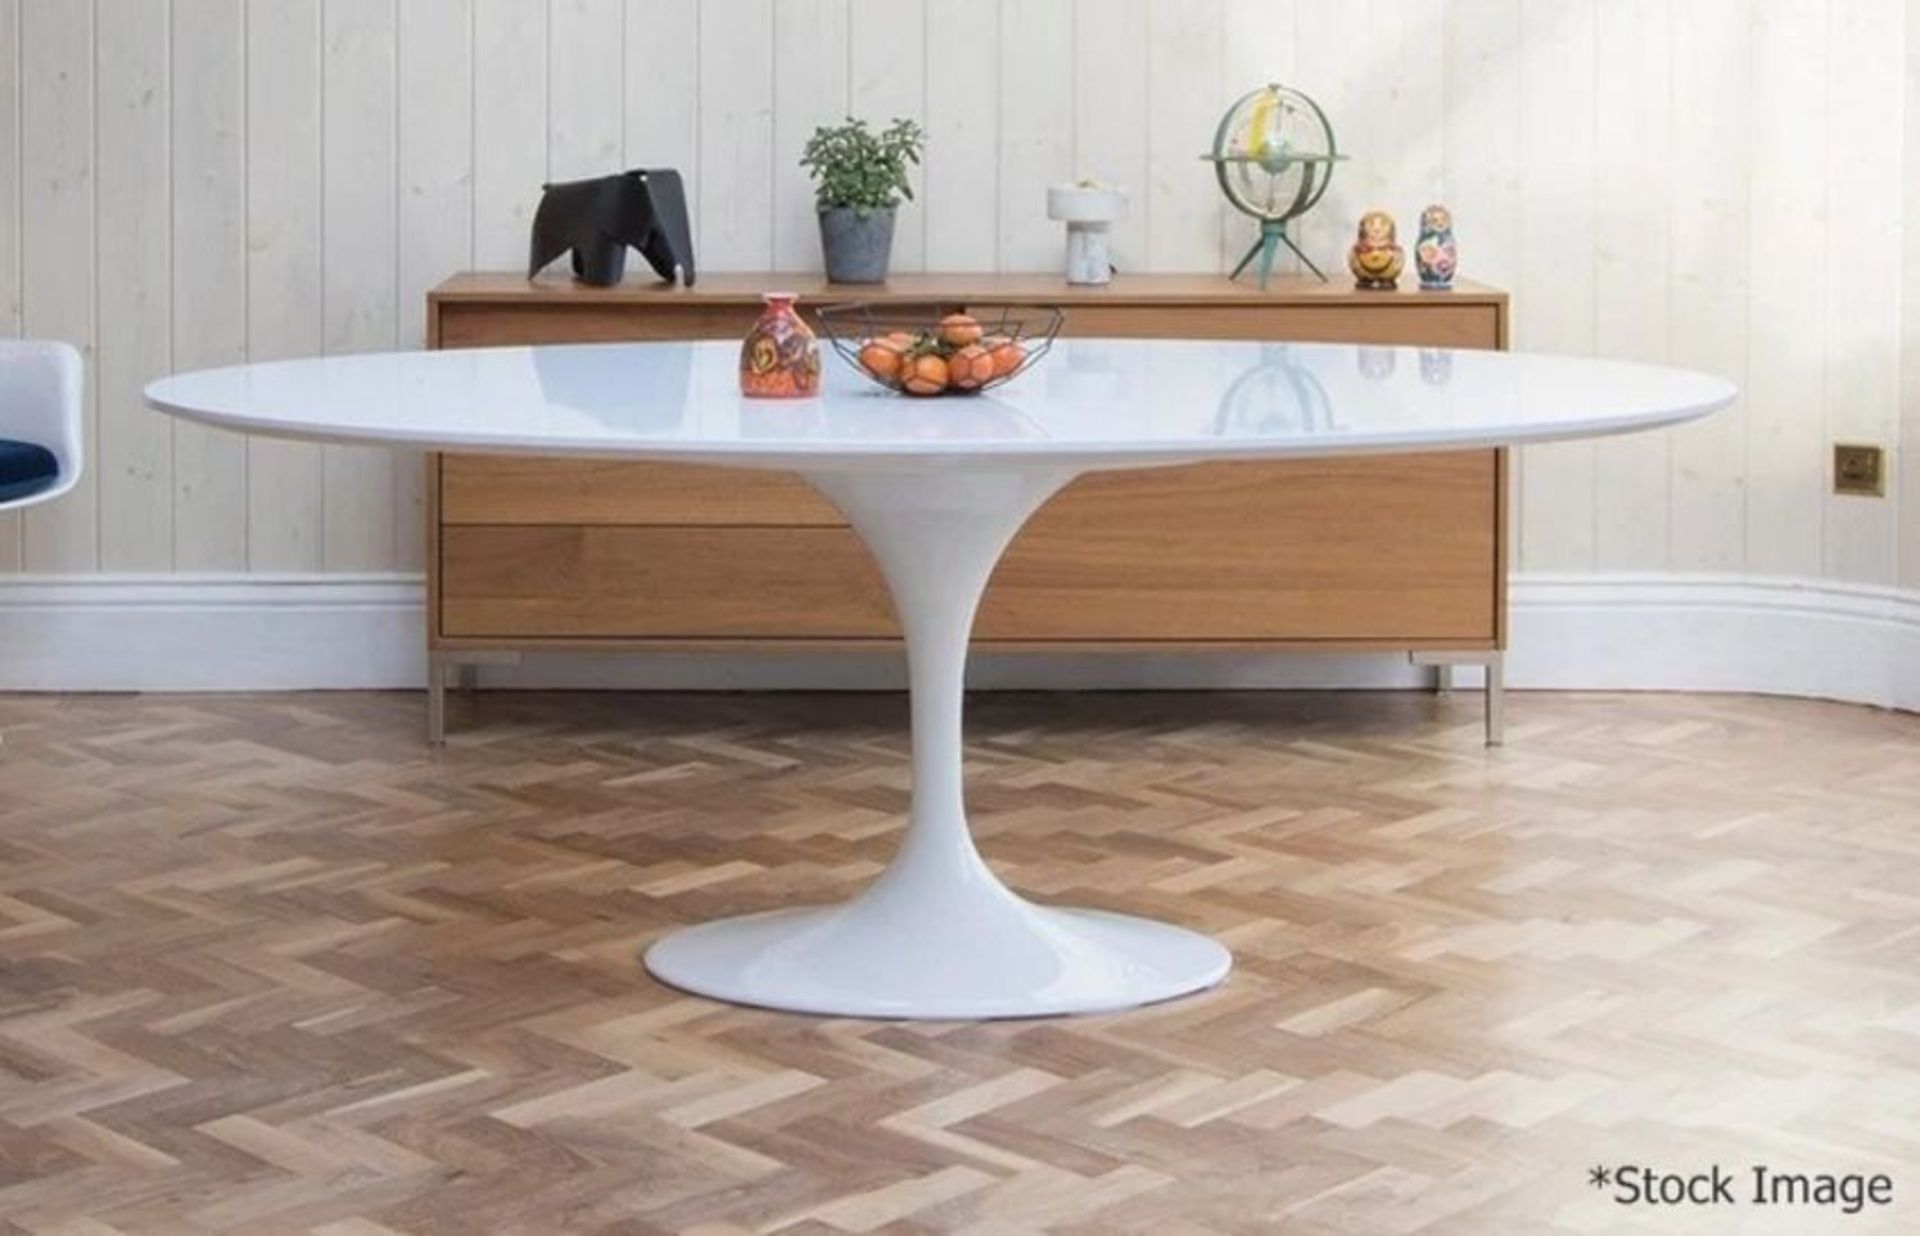 Eero Saarinen Inspired Large Oval Dining Table - New